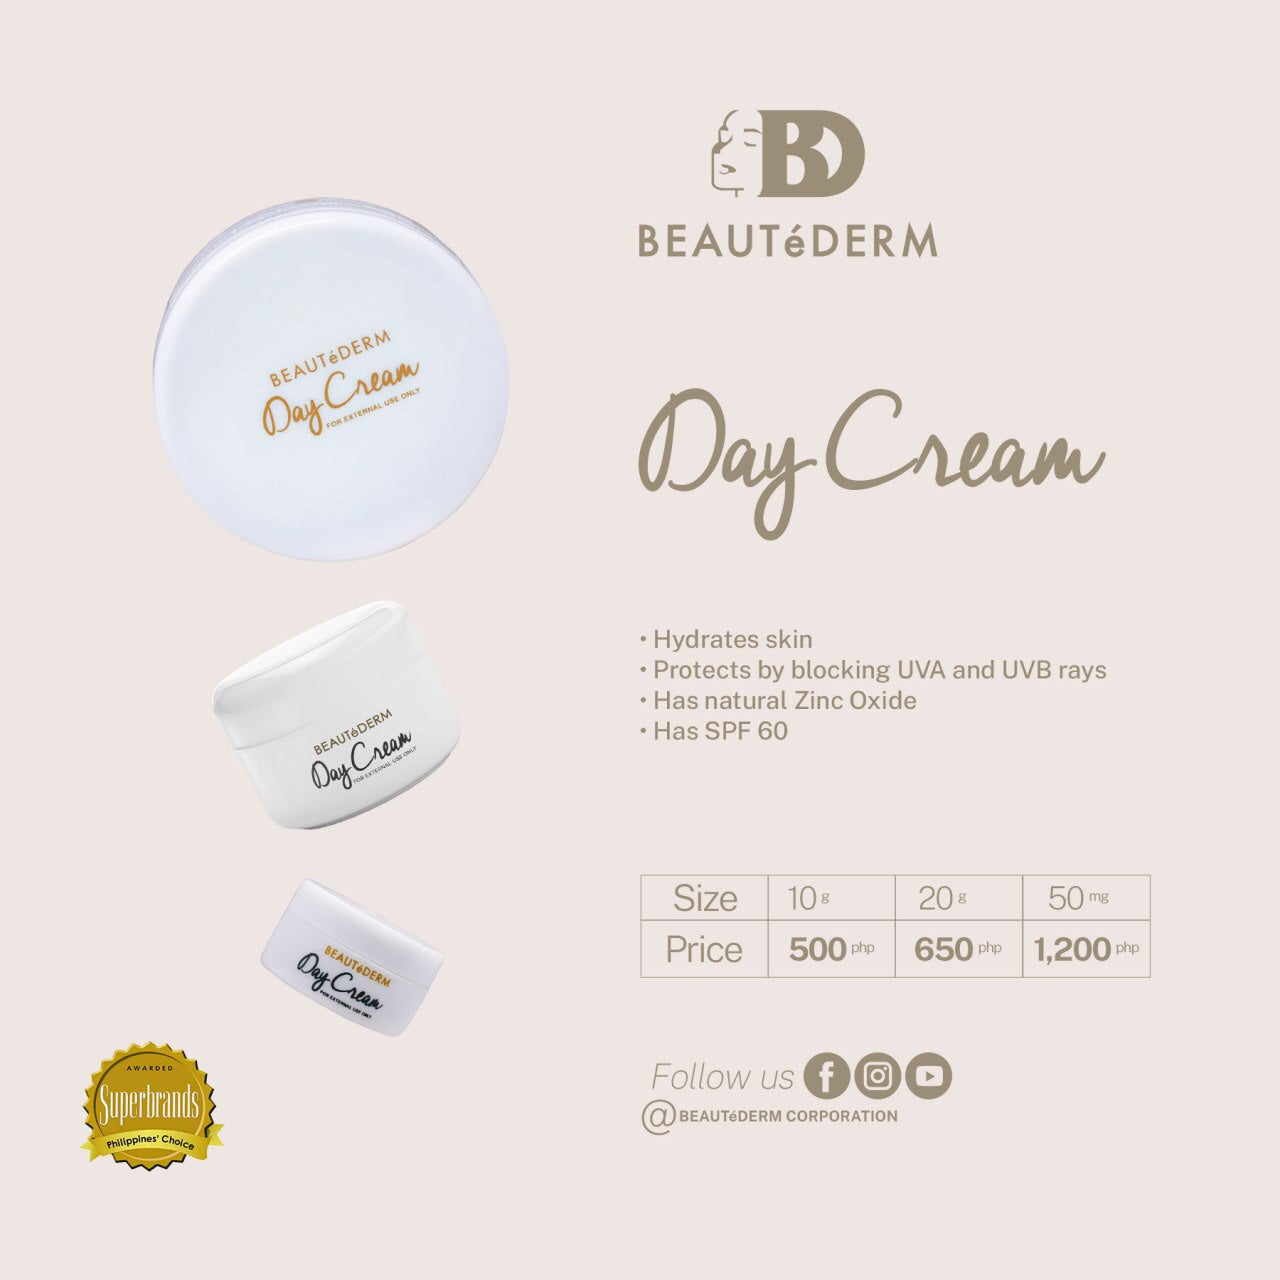 Buy Day Cream 20g, Get Soleil UV Block Lotion @50% OFF